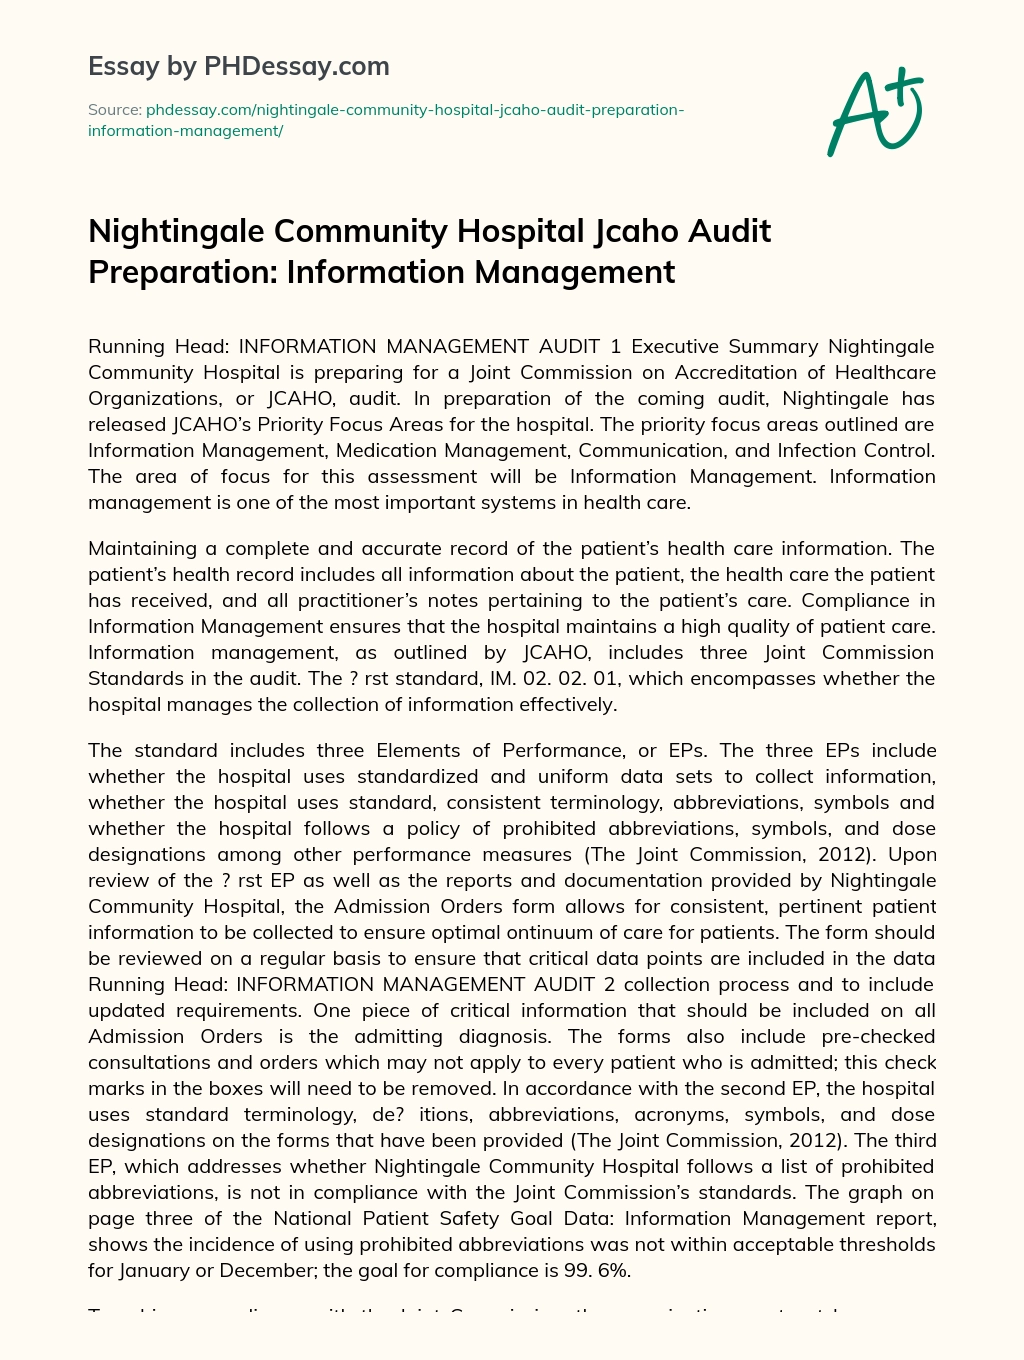 Nightingale Community Hospital Jcaho Audit Preparation: Information Management essay